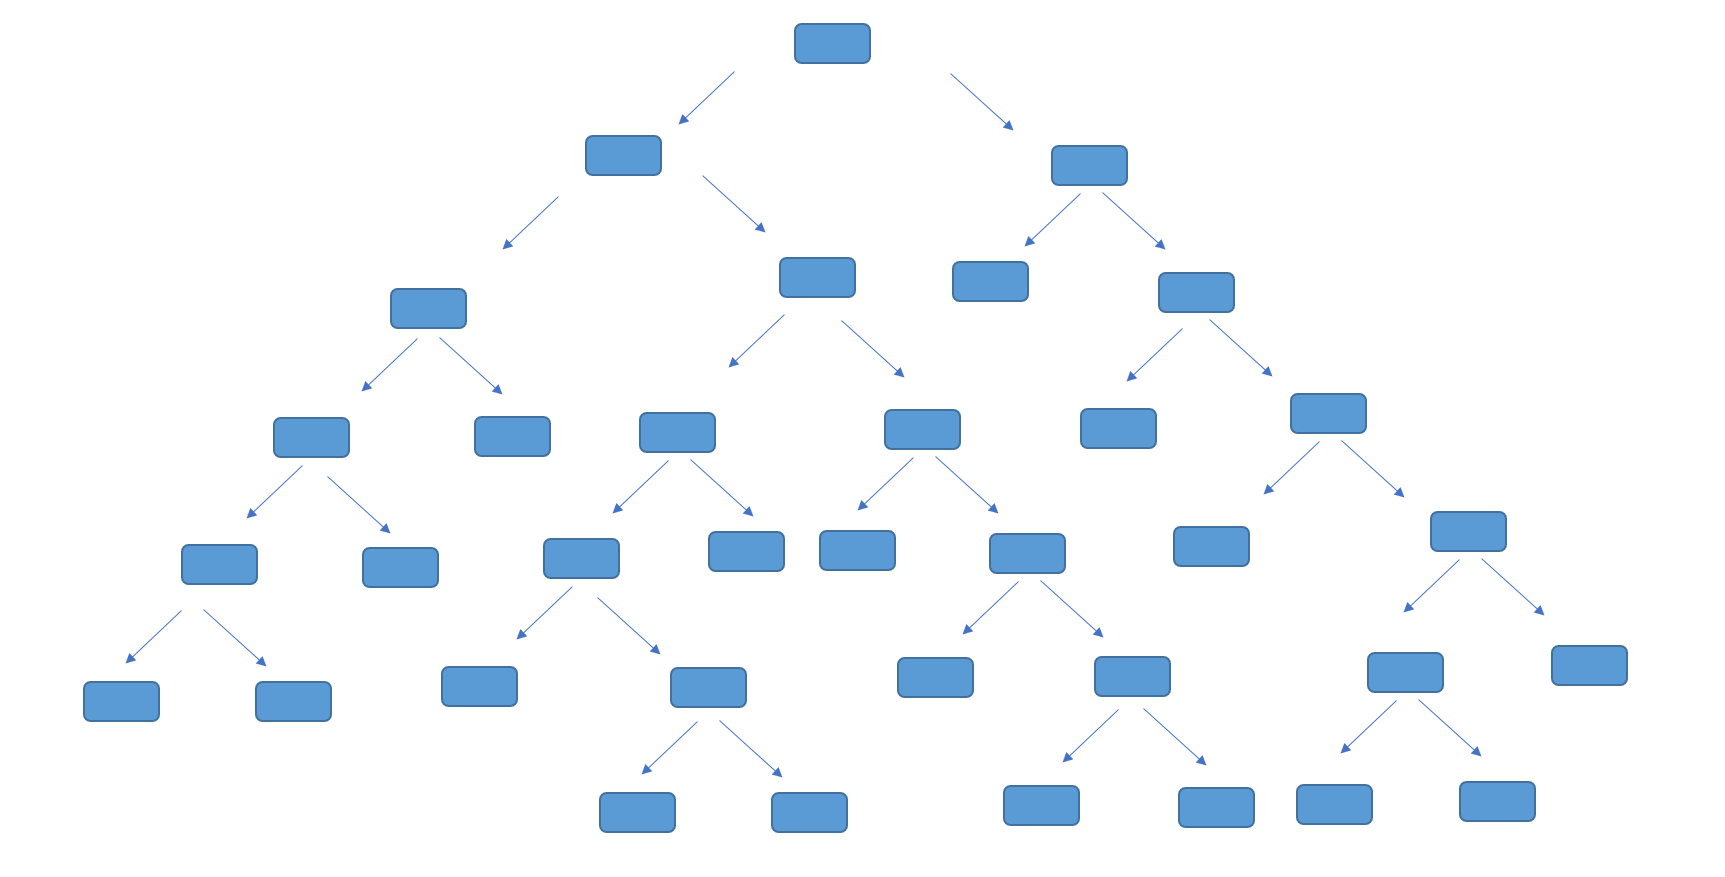 Illustration of a Decision Tree